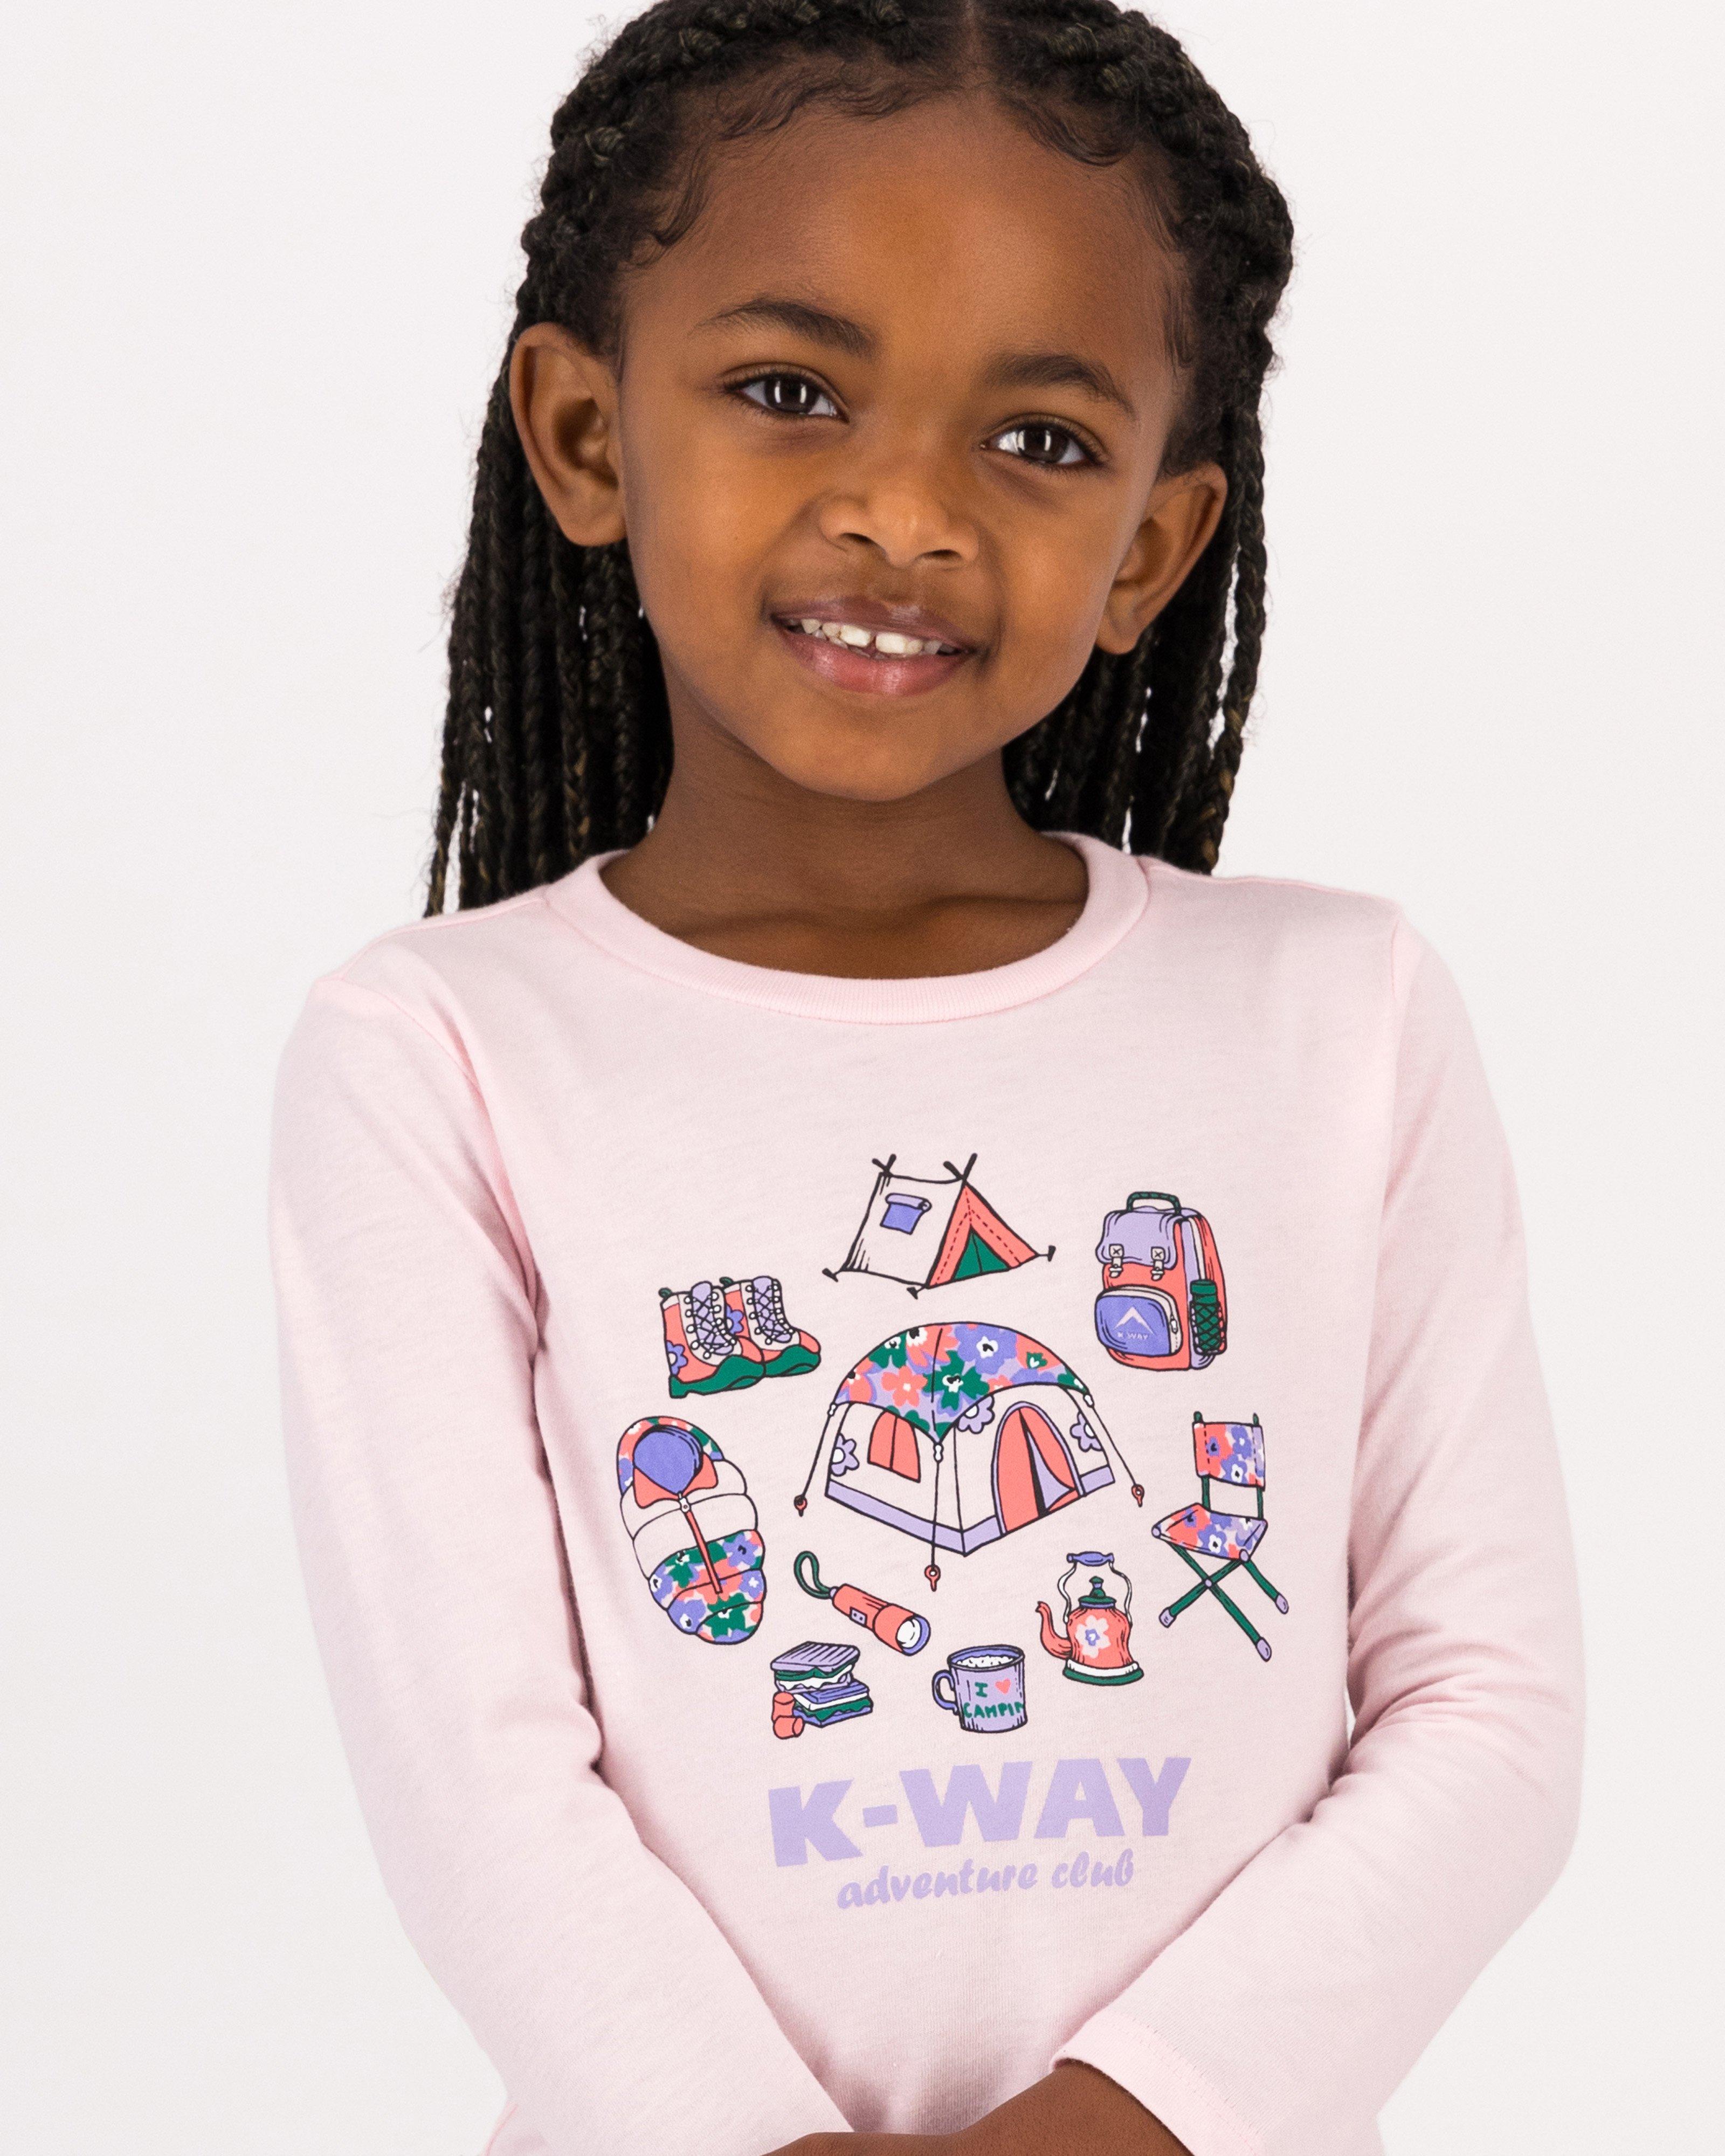 K-Way Kids Girls' Adventure Club T-shirt -  Pale Pink